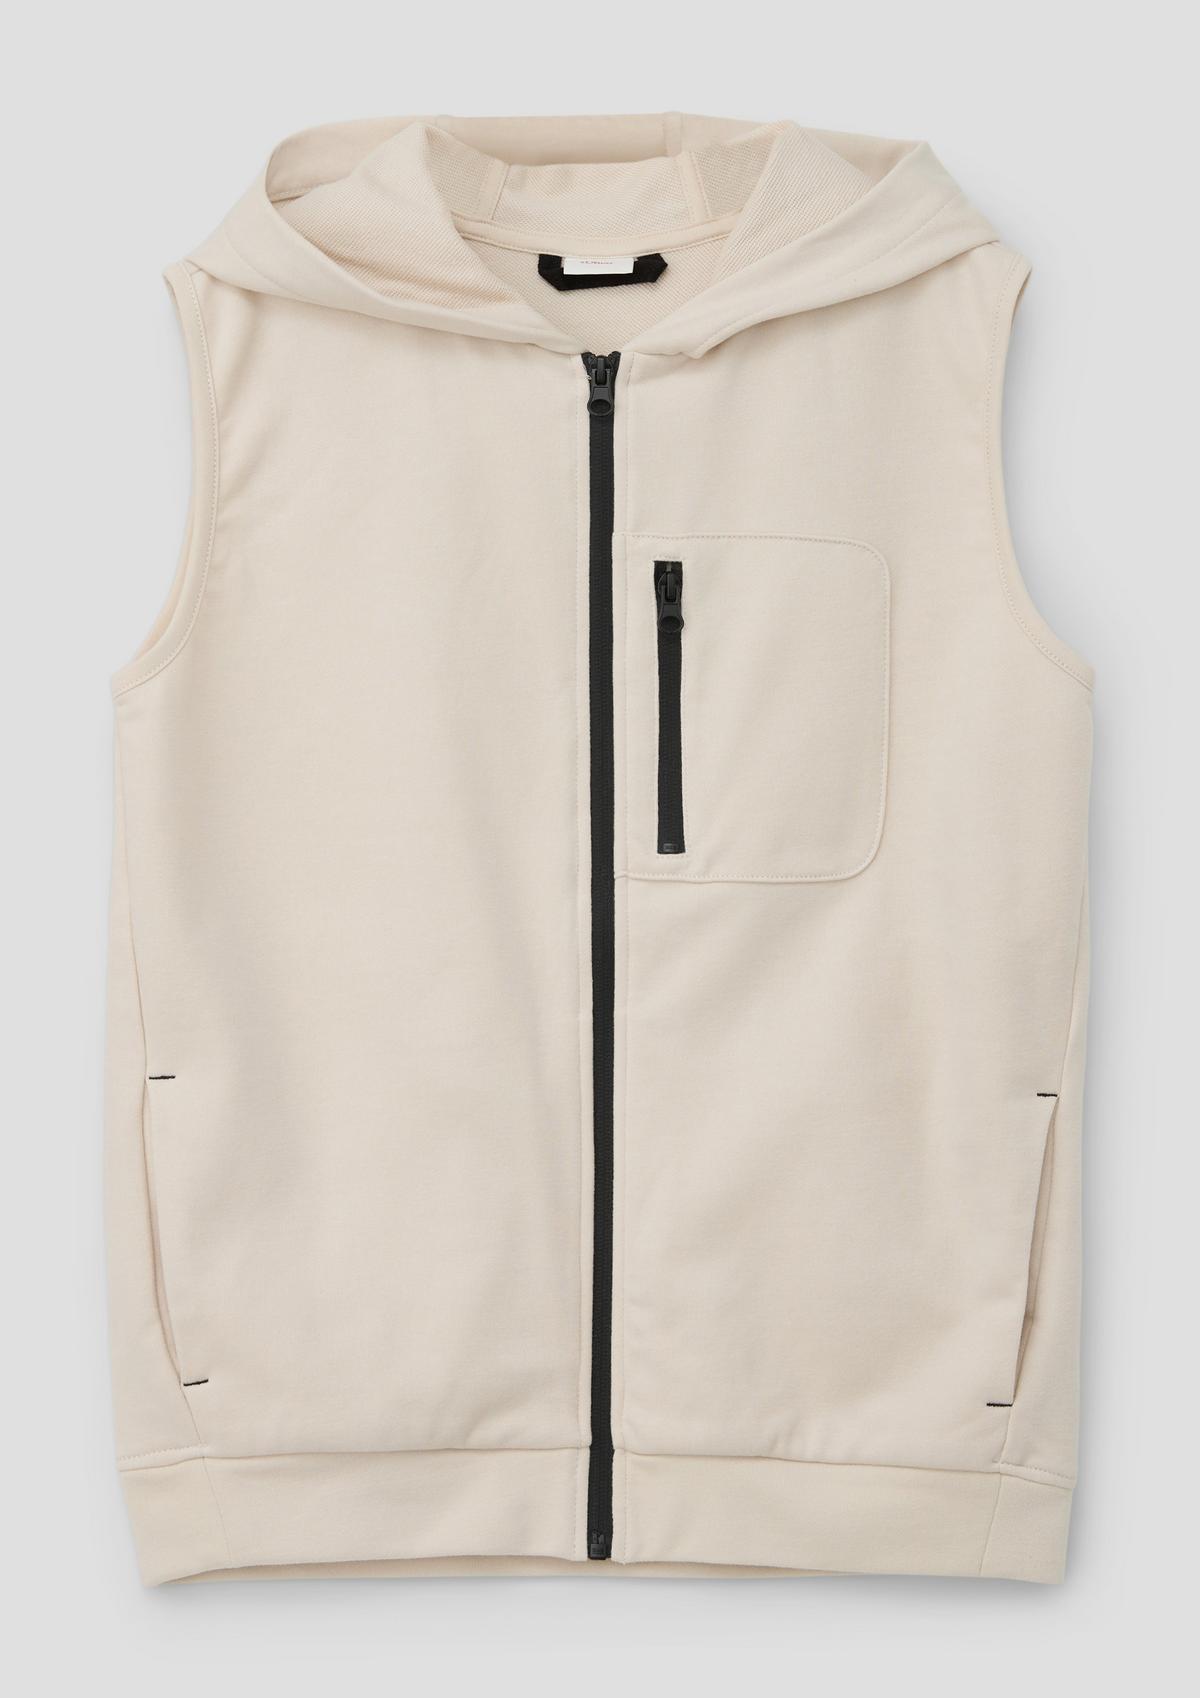 s.Oliver Sweatshirt body warmer with a hood